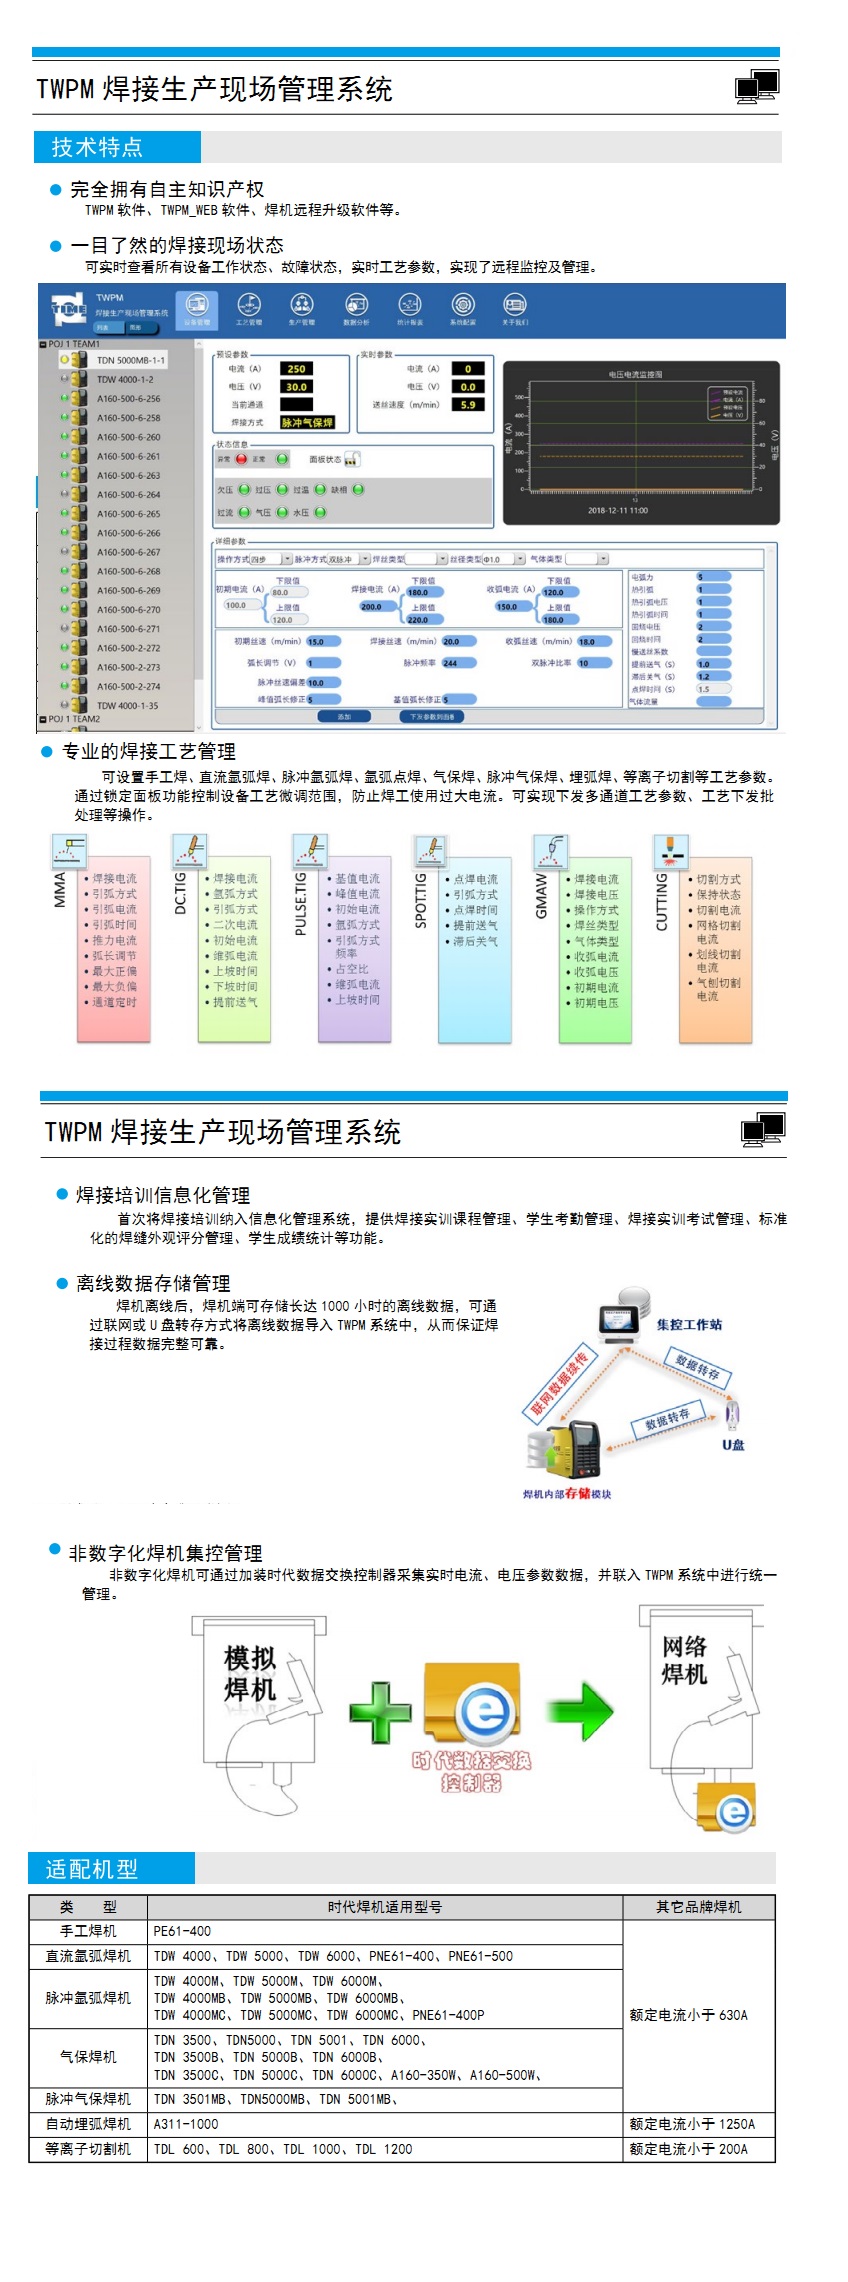 TWPM焊接生产现场管理系统1.jpg